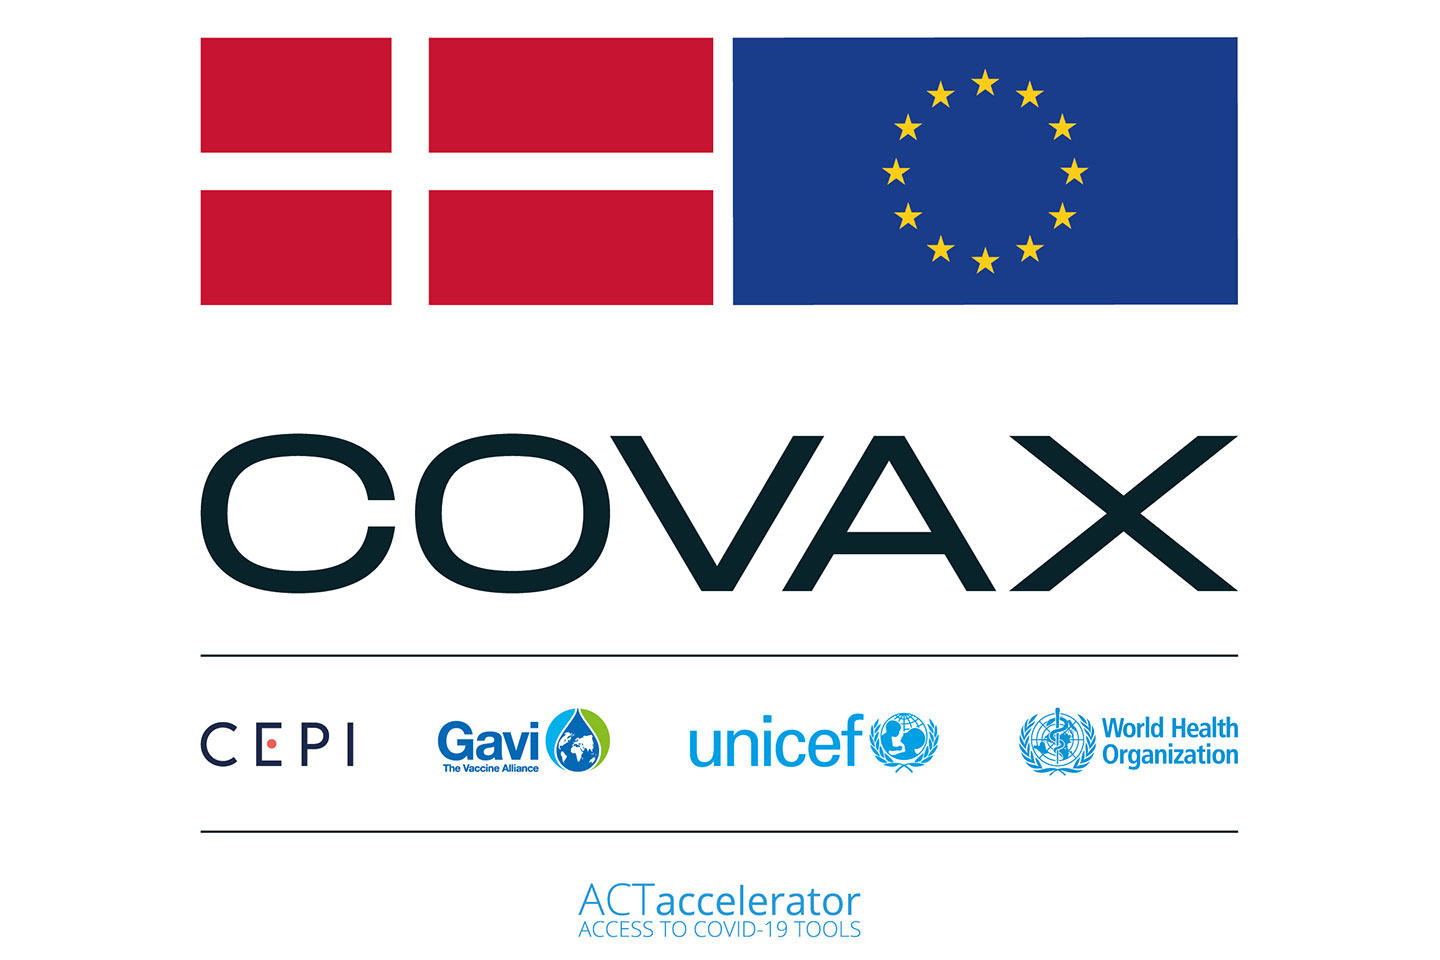 COVAX dose donations – Denmark